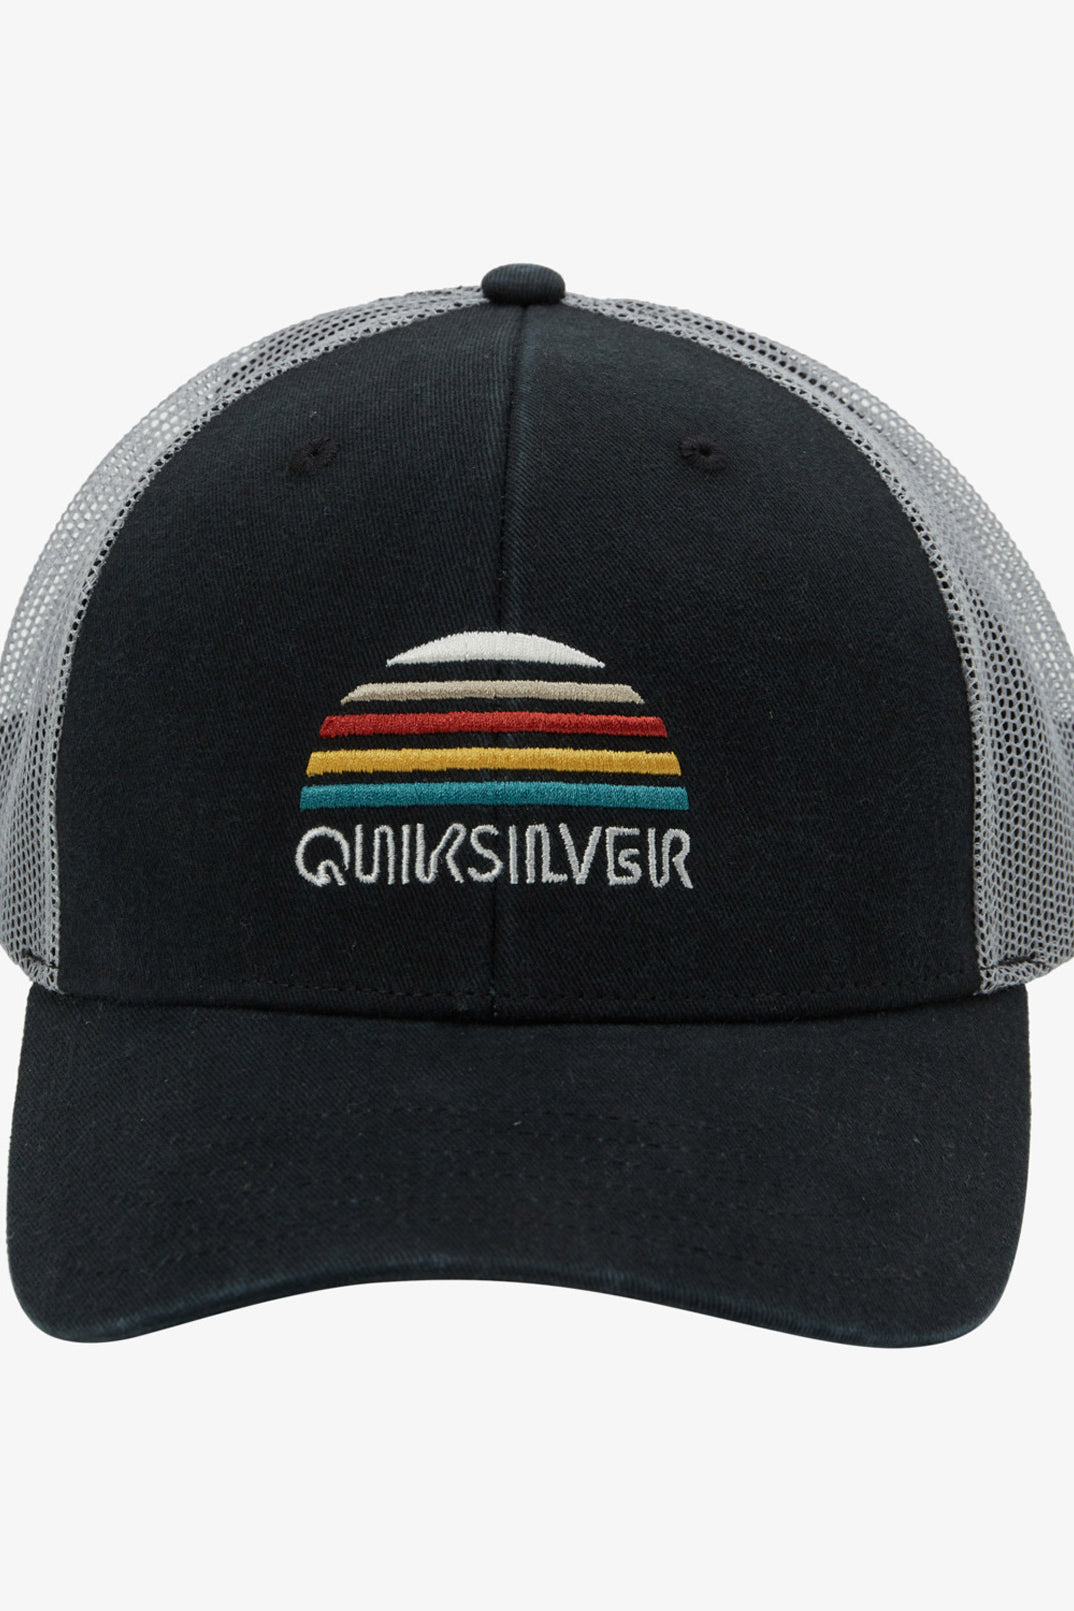 Quiksilver: Stringer Trucker Hat